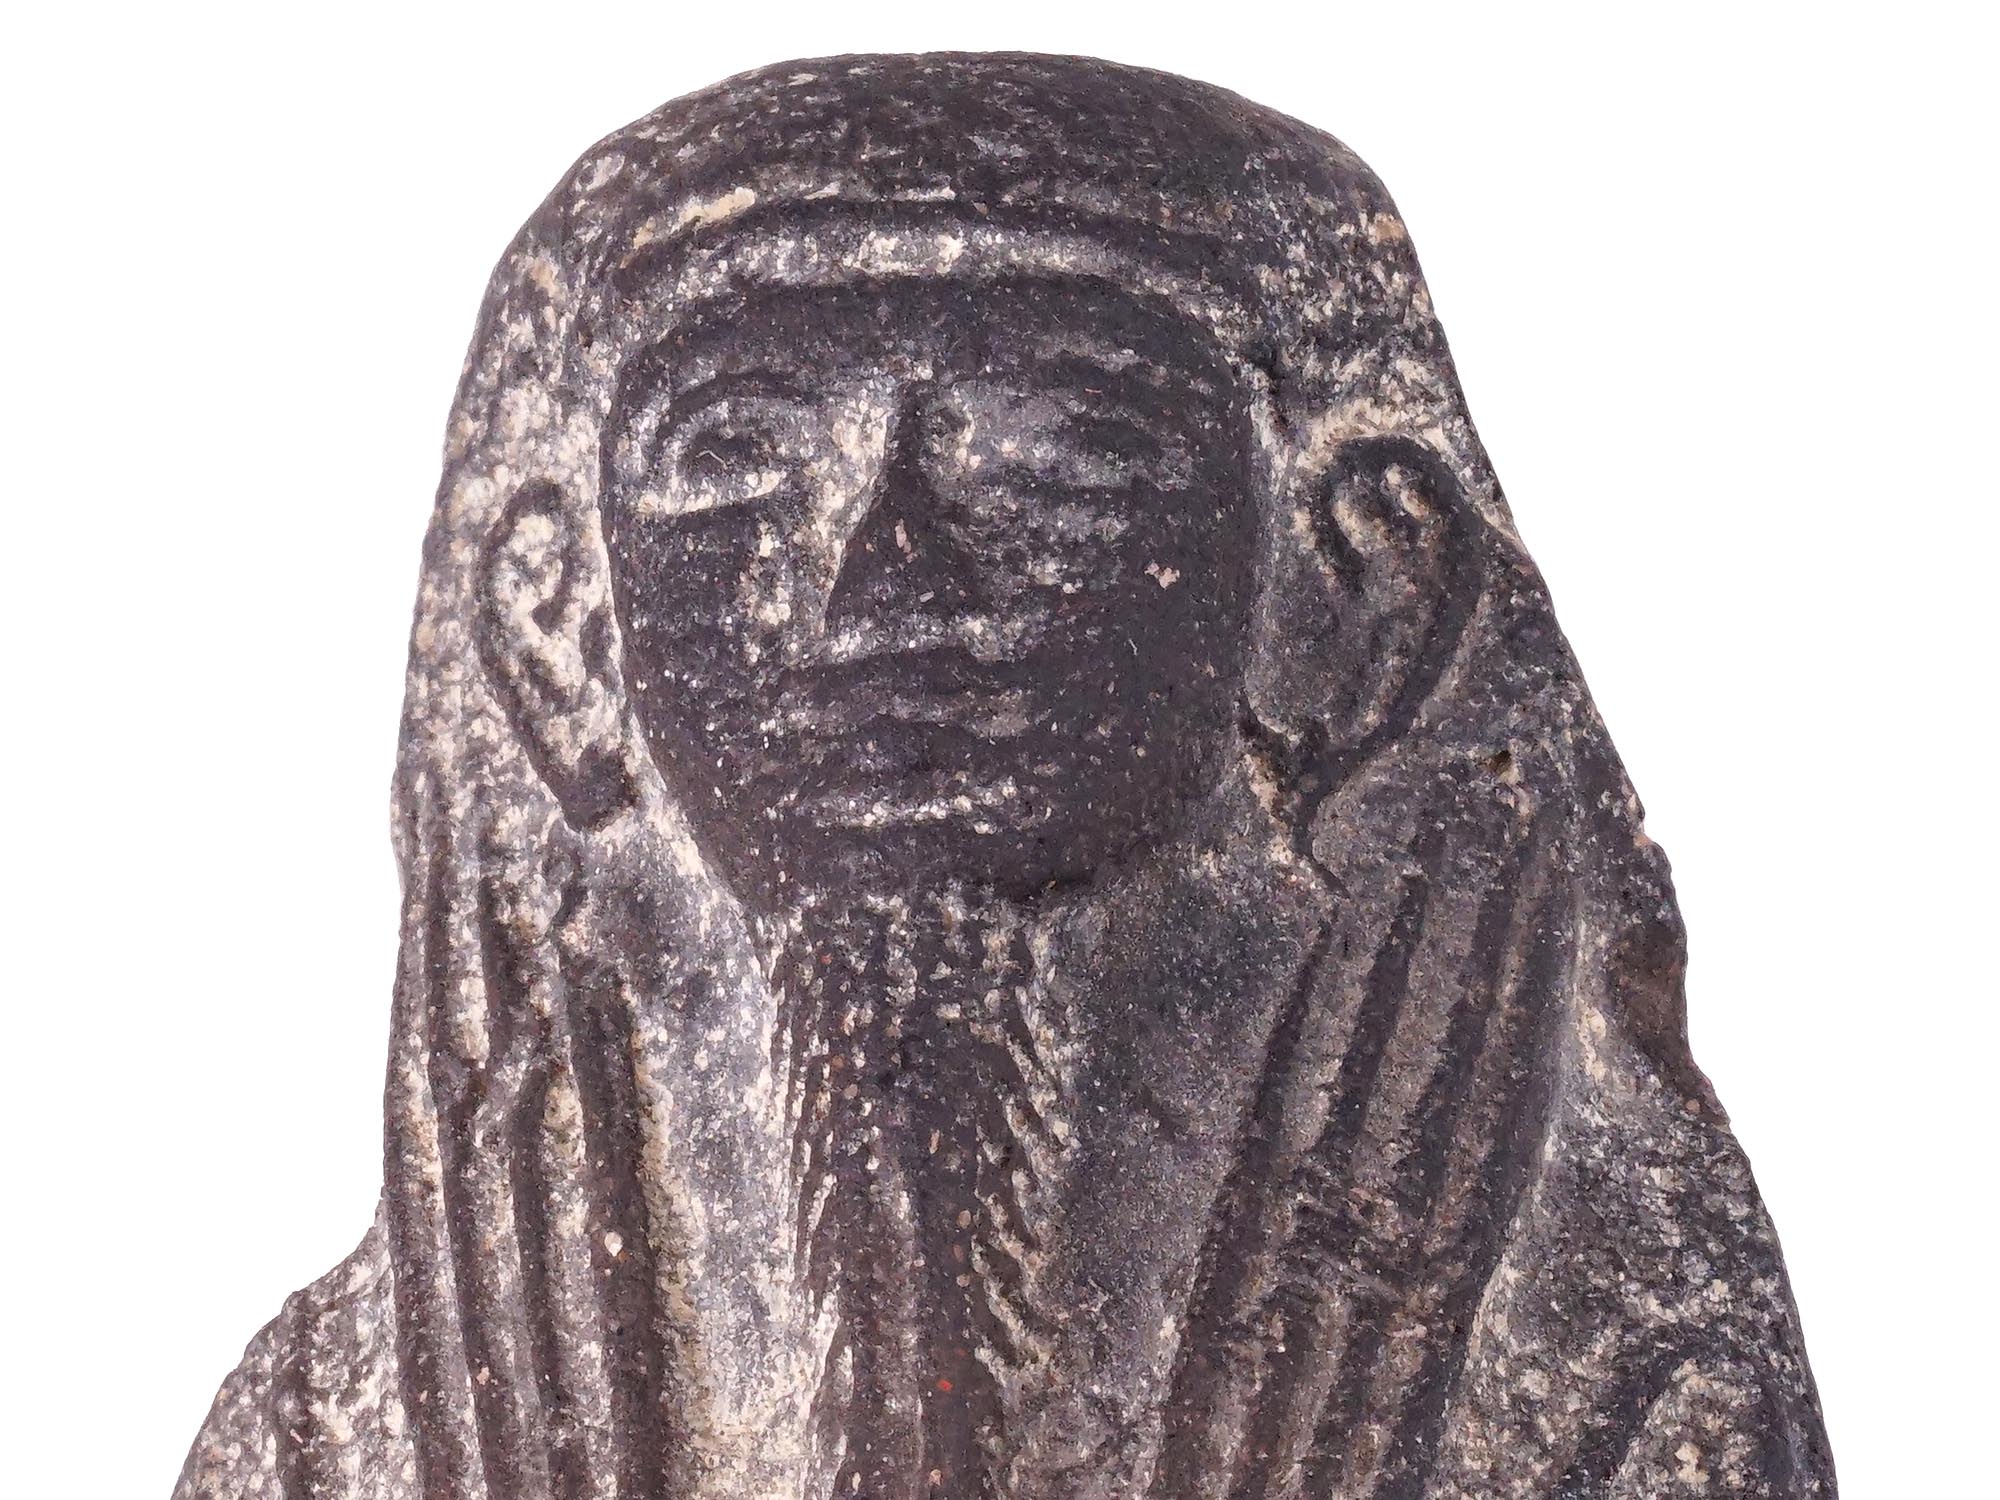 EGYPTIAN BLACK POTTERY USHABTI WITH HIEROGLYPHICS PIC-7